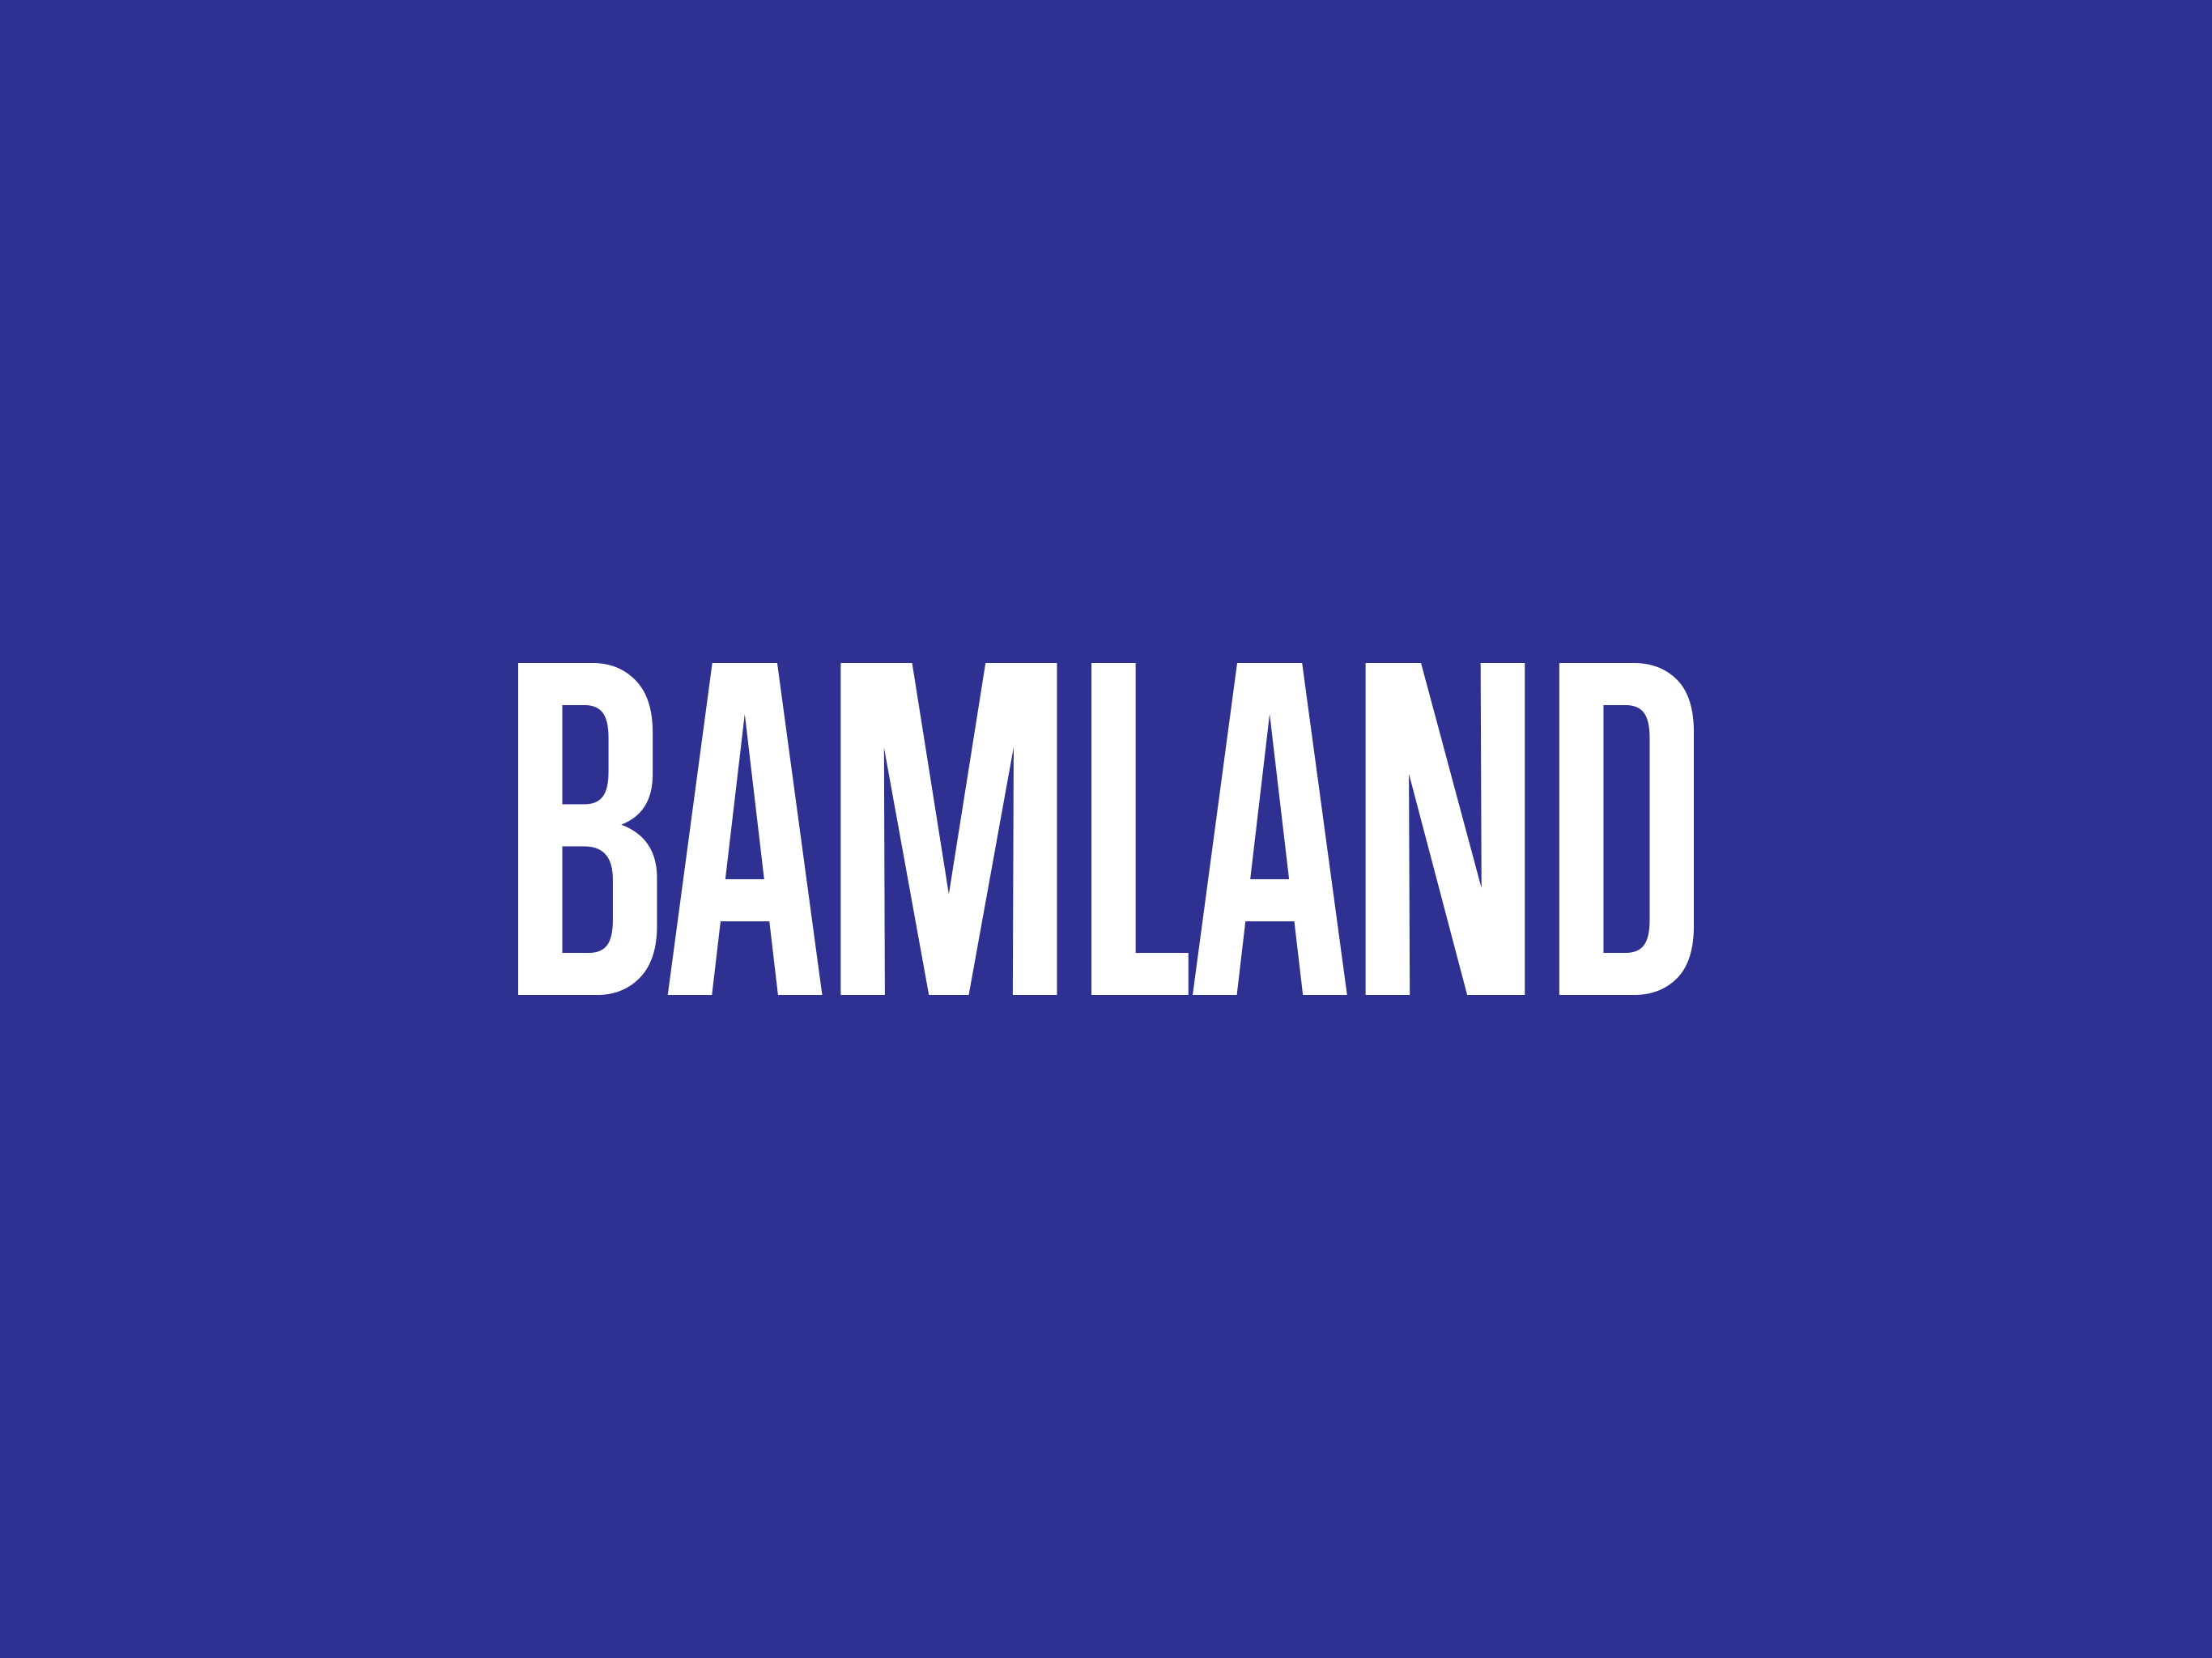 Bamland